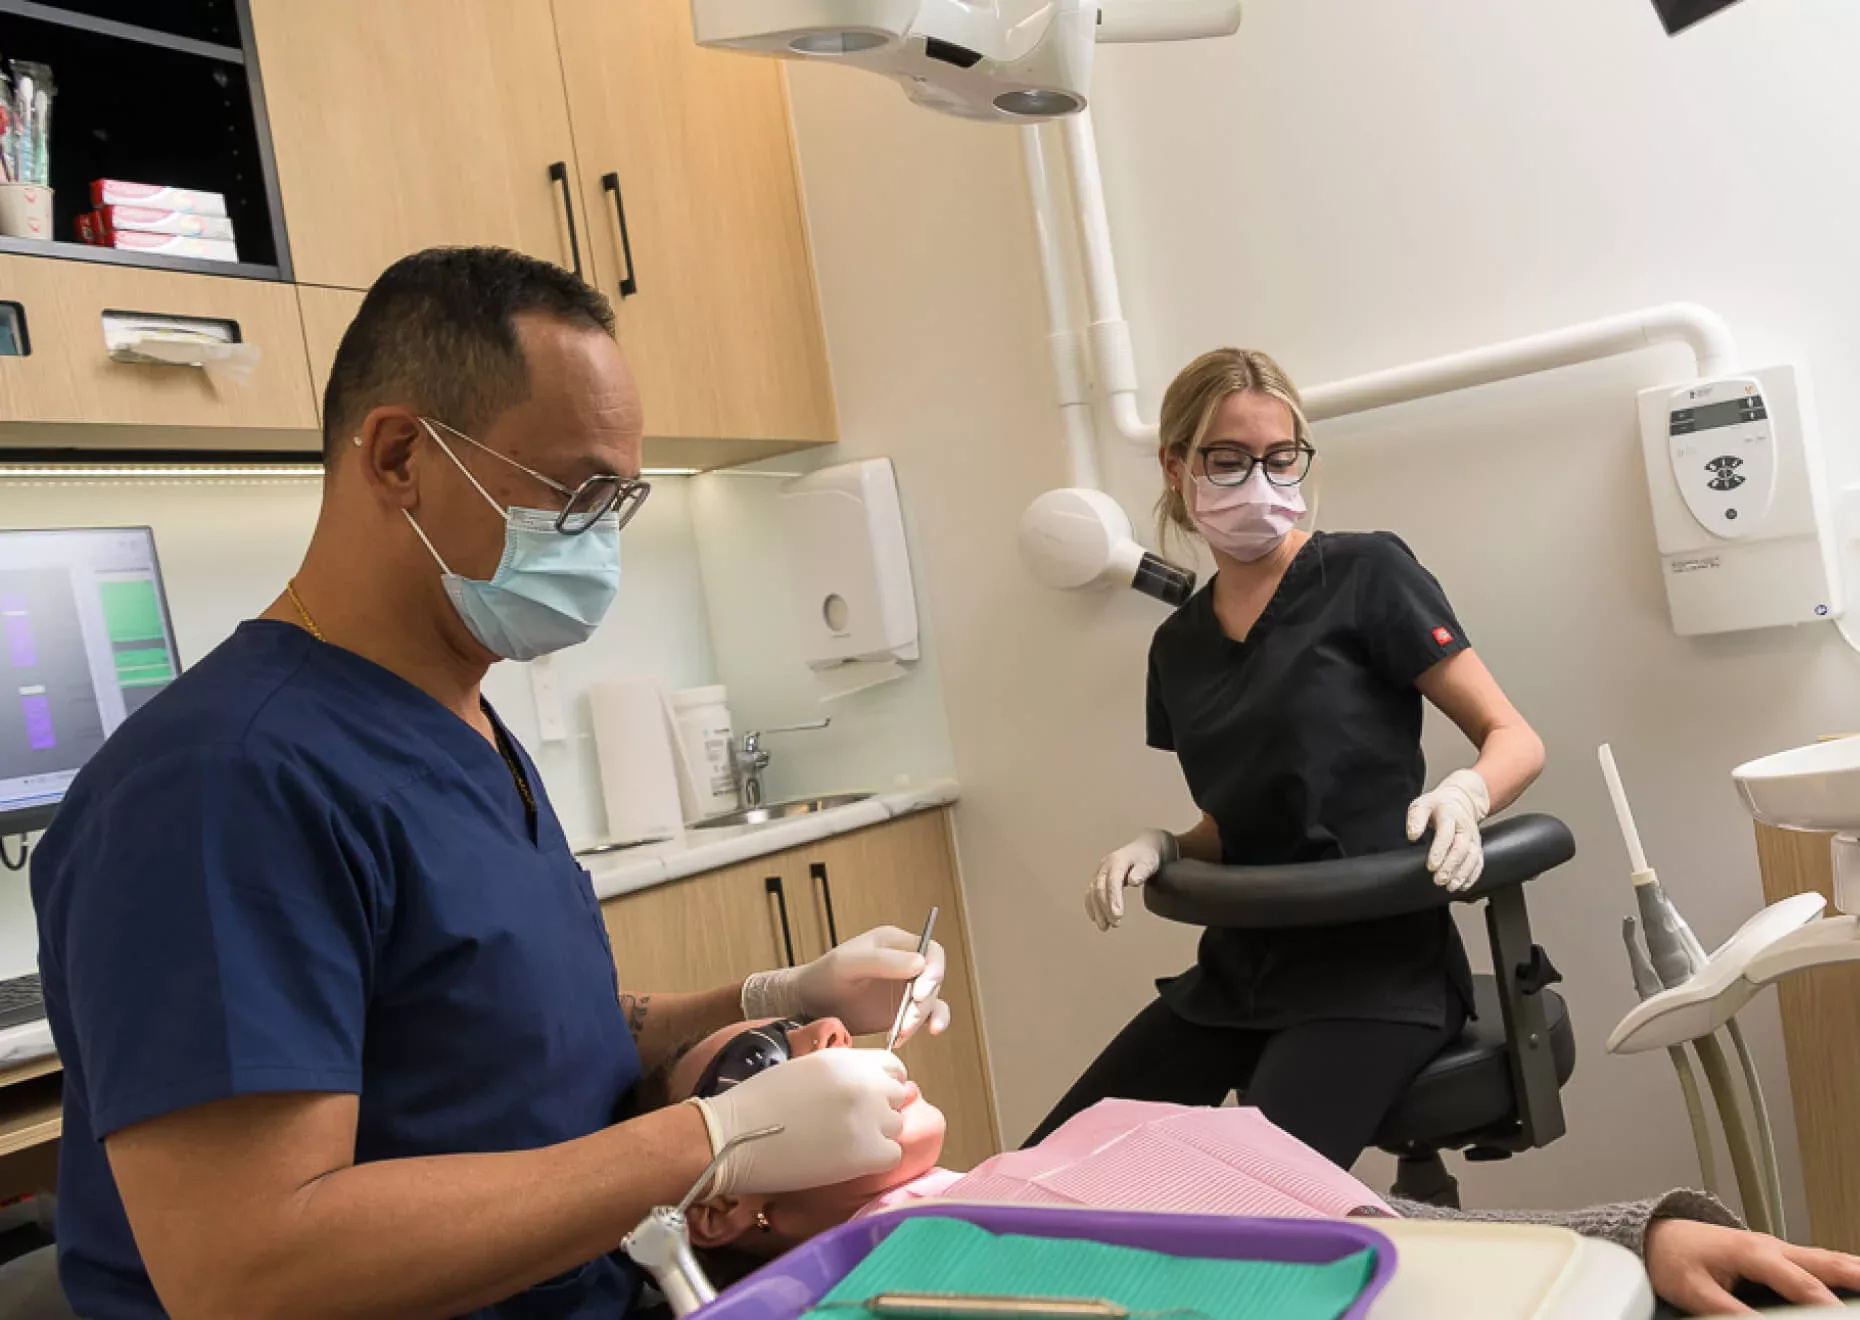 Gentle Dental staff conduct dental examination